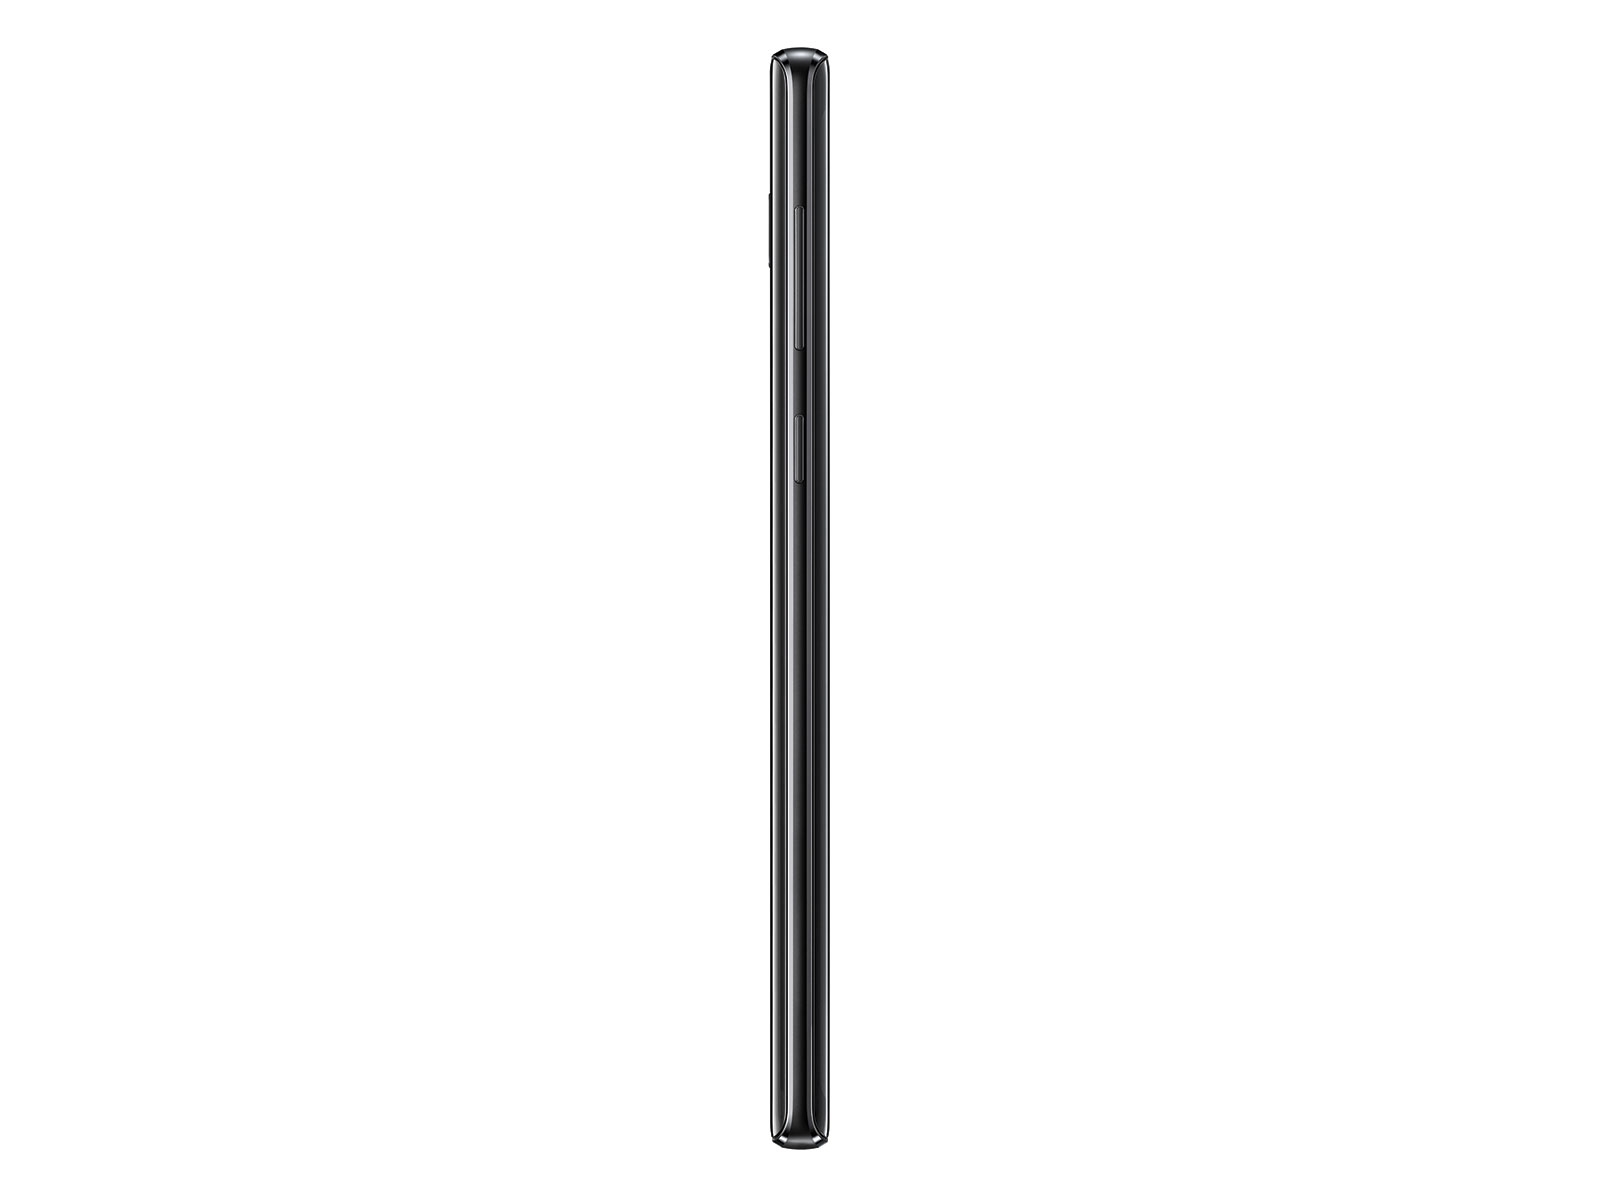 Samsung Galaxy Note9 128 GB (Verizon) : Midnight Black | Samsung US